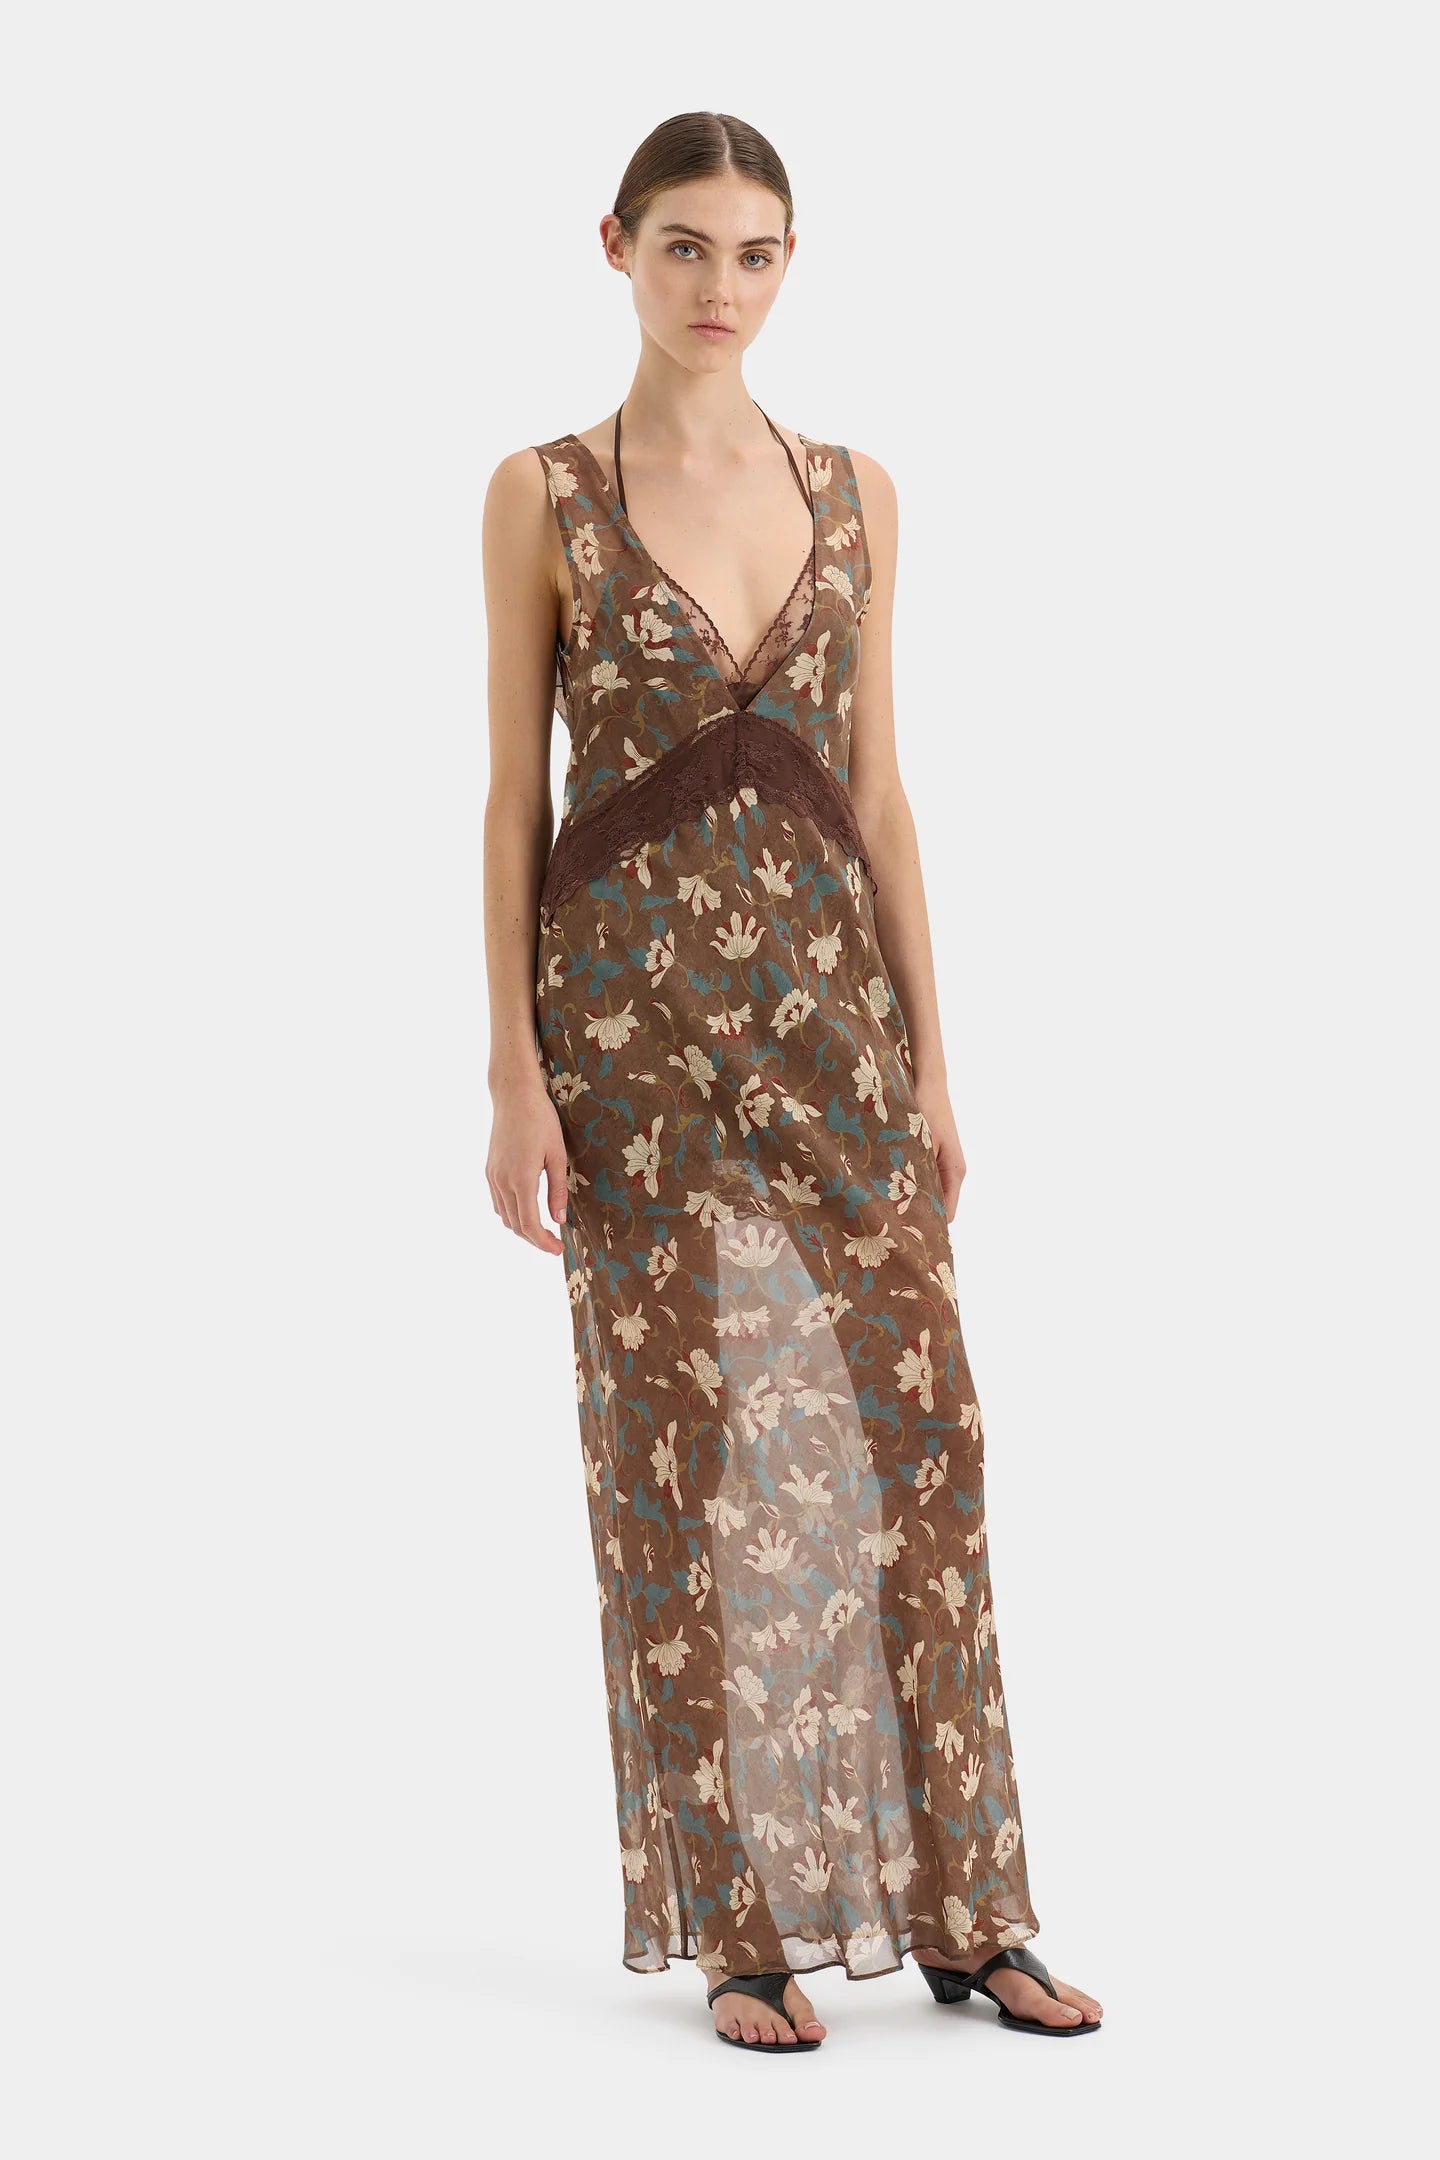 Avellino Lace Layered Dress - Chocolate Fiore Print